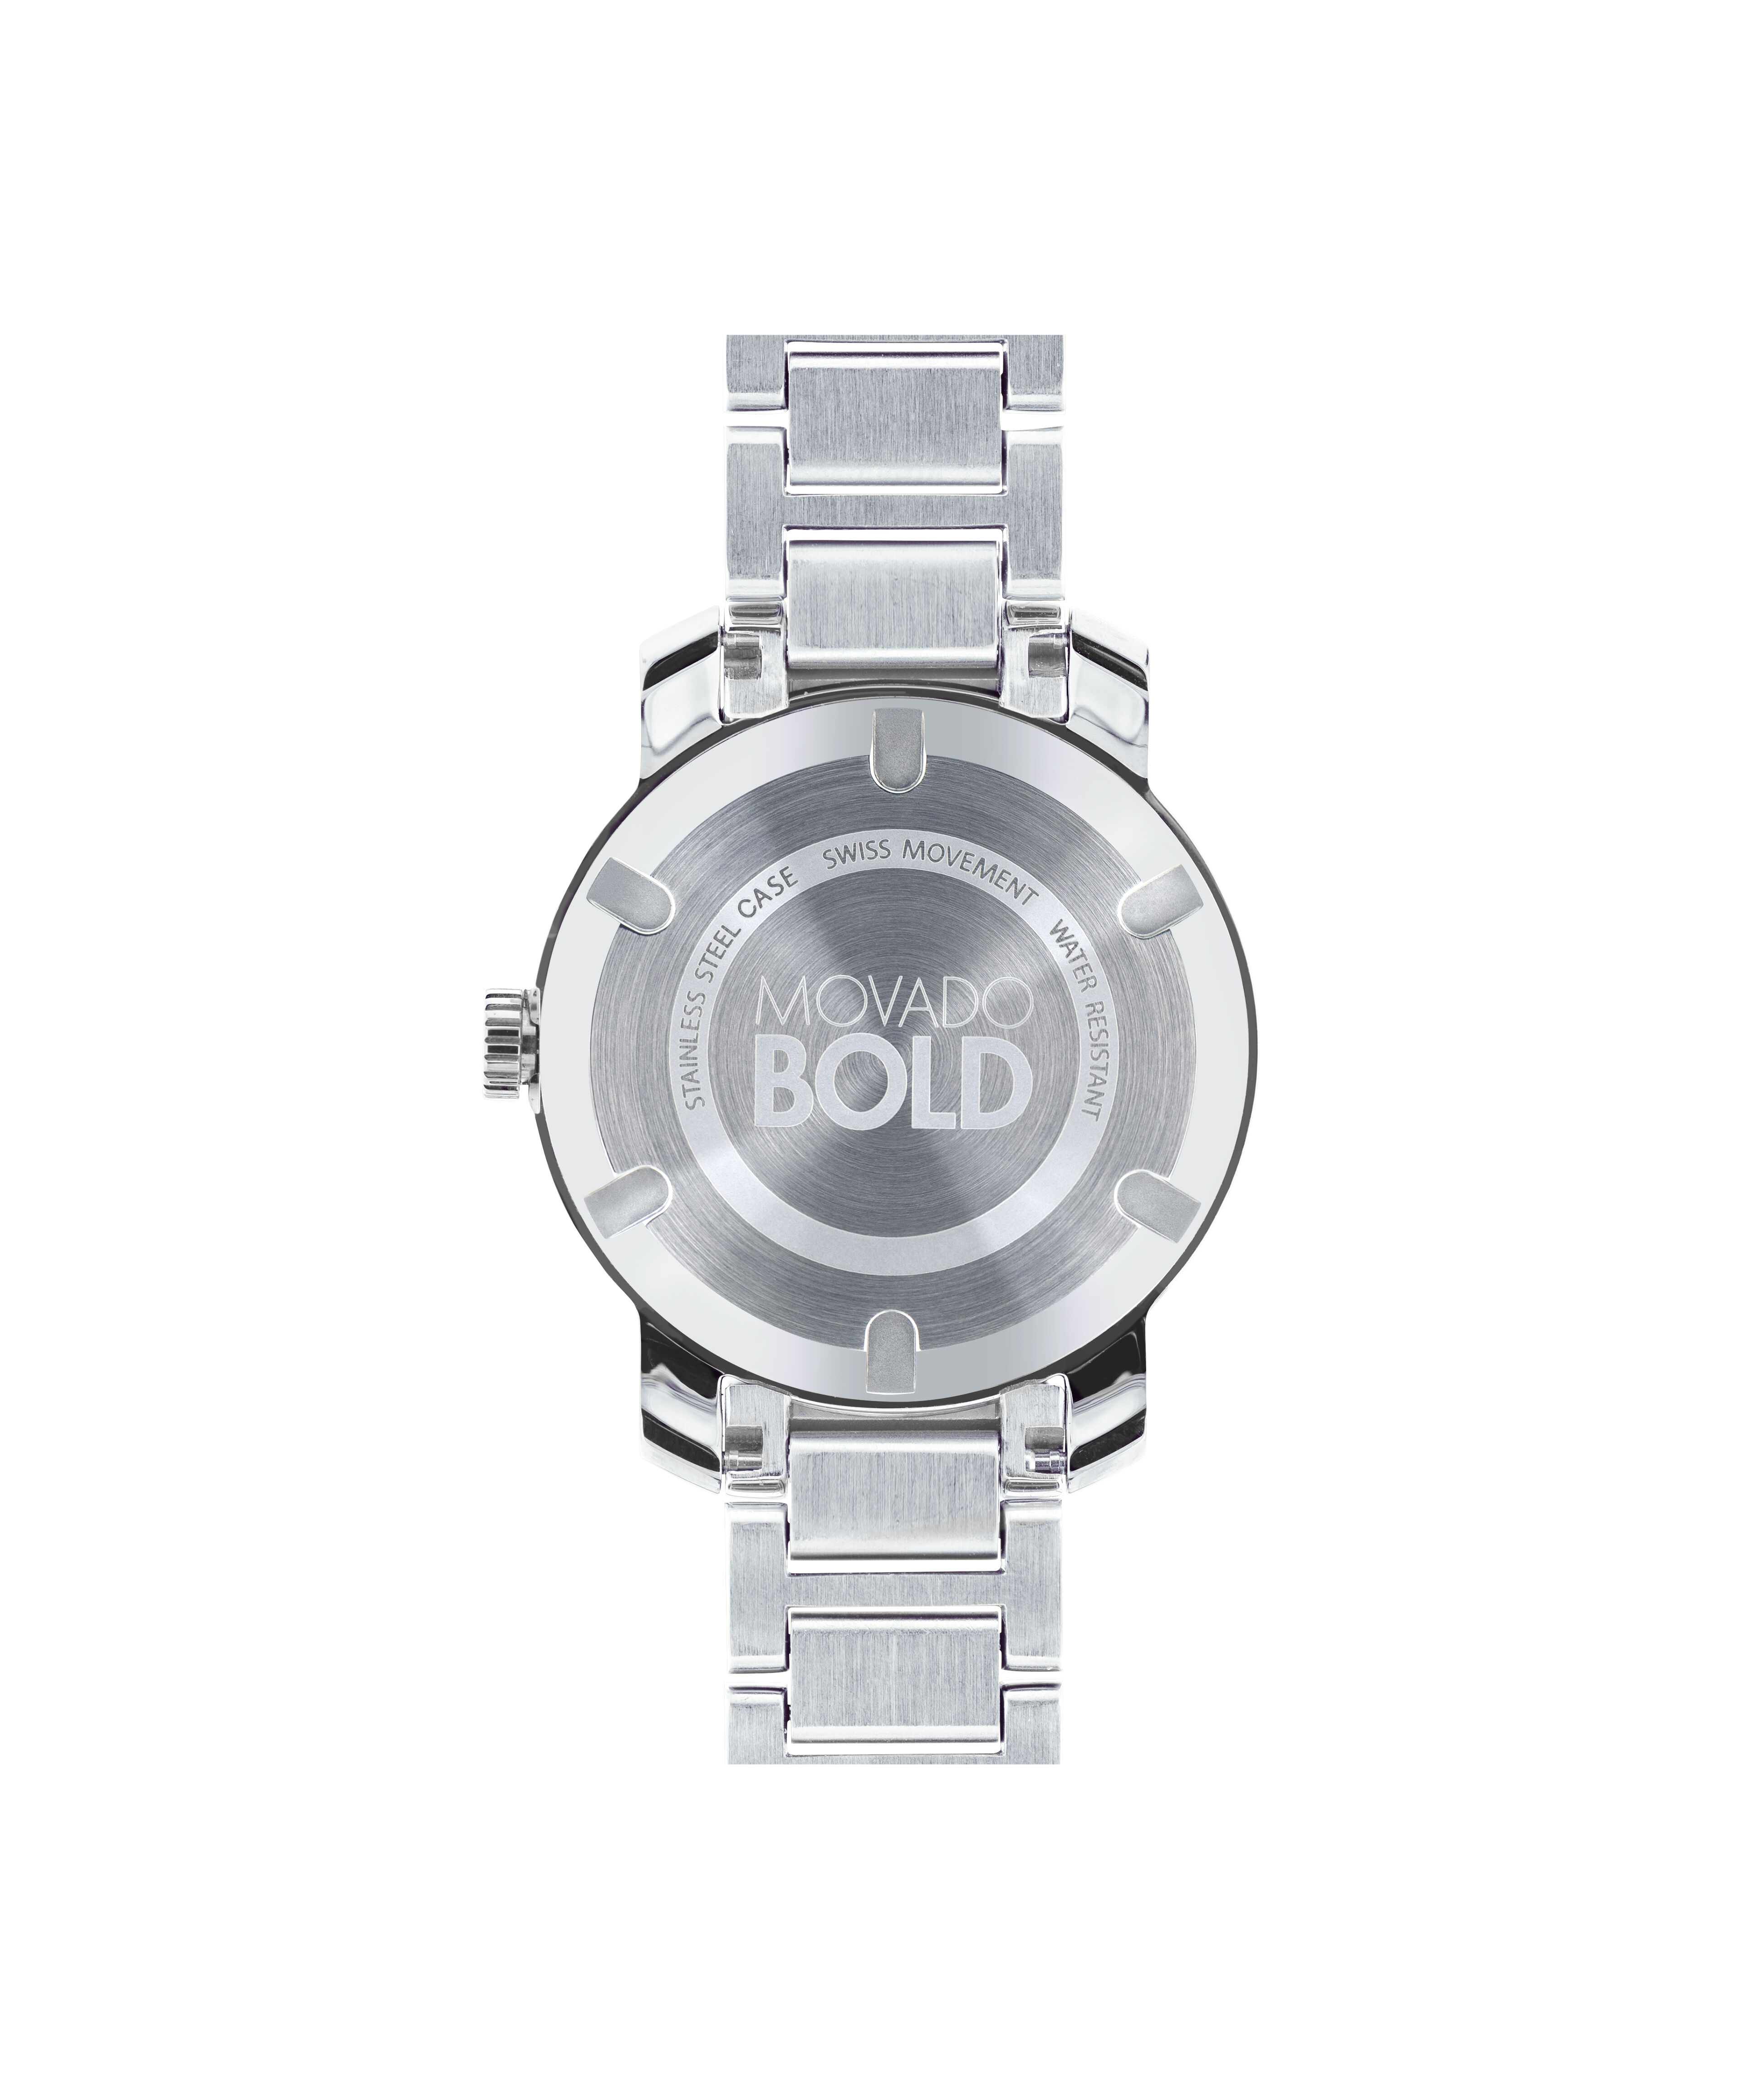 Replica Rolex Watch For Sale